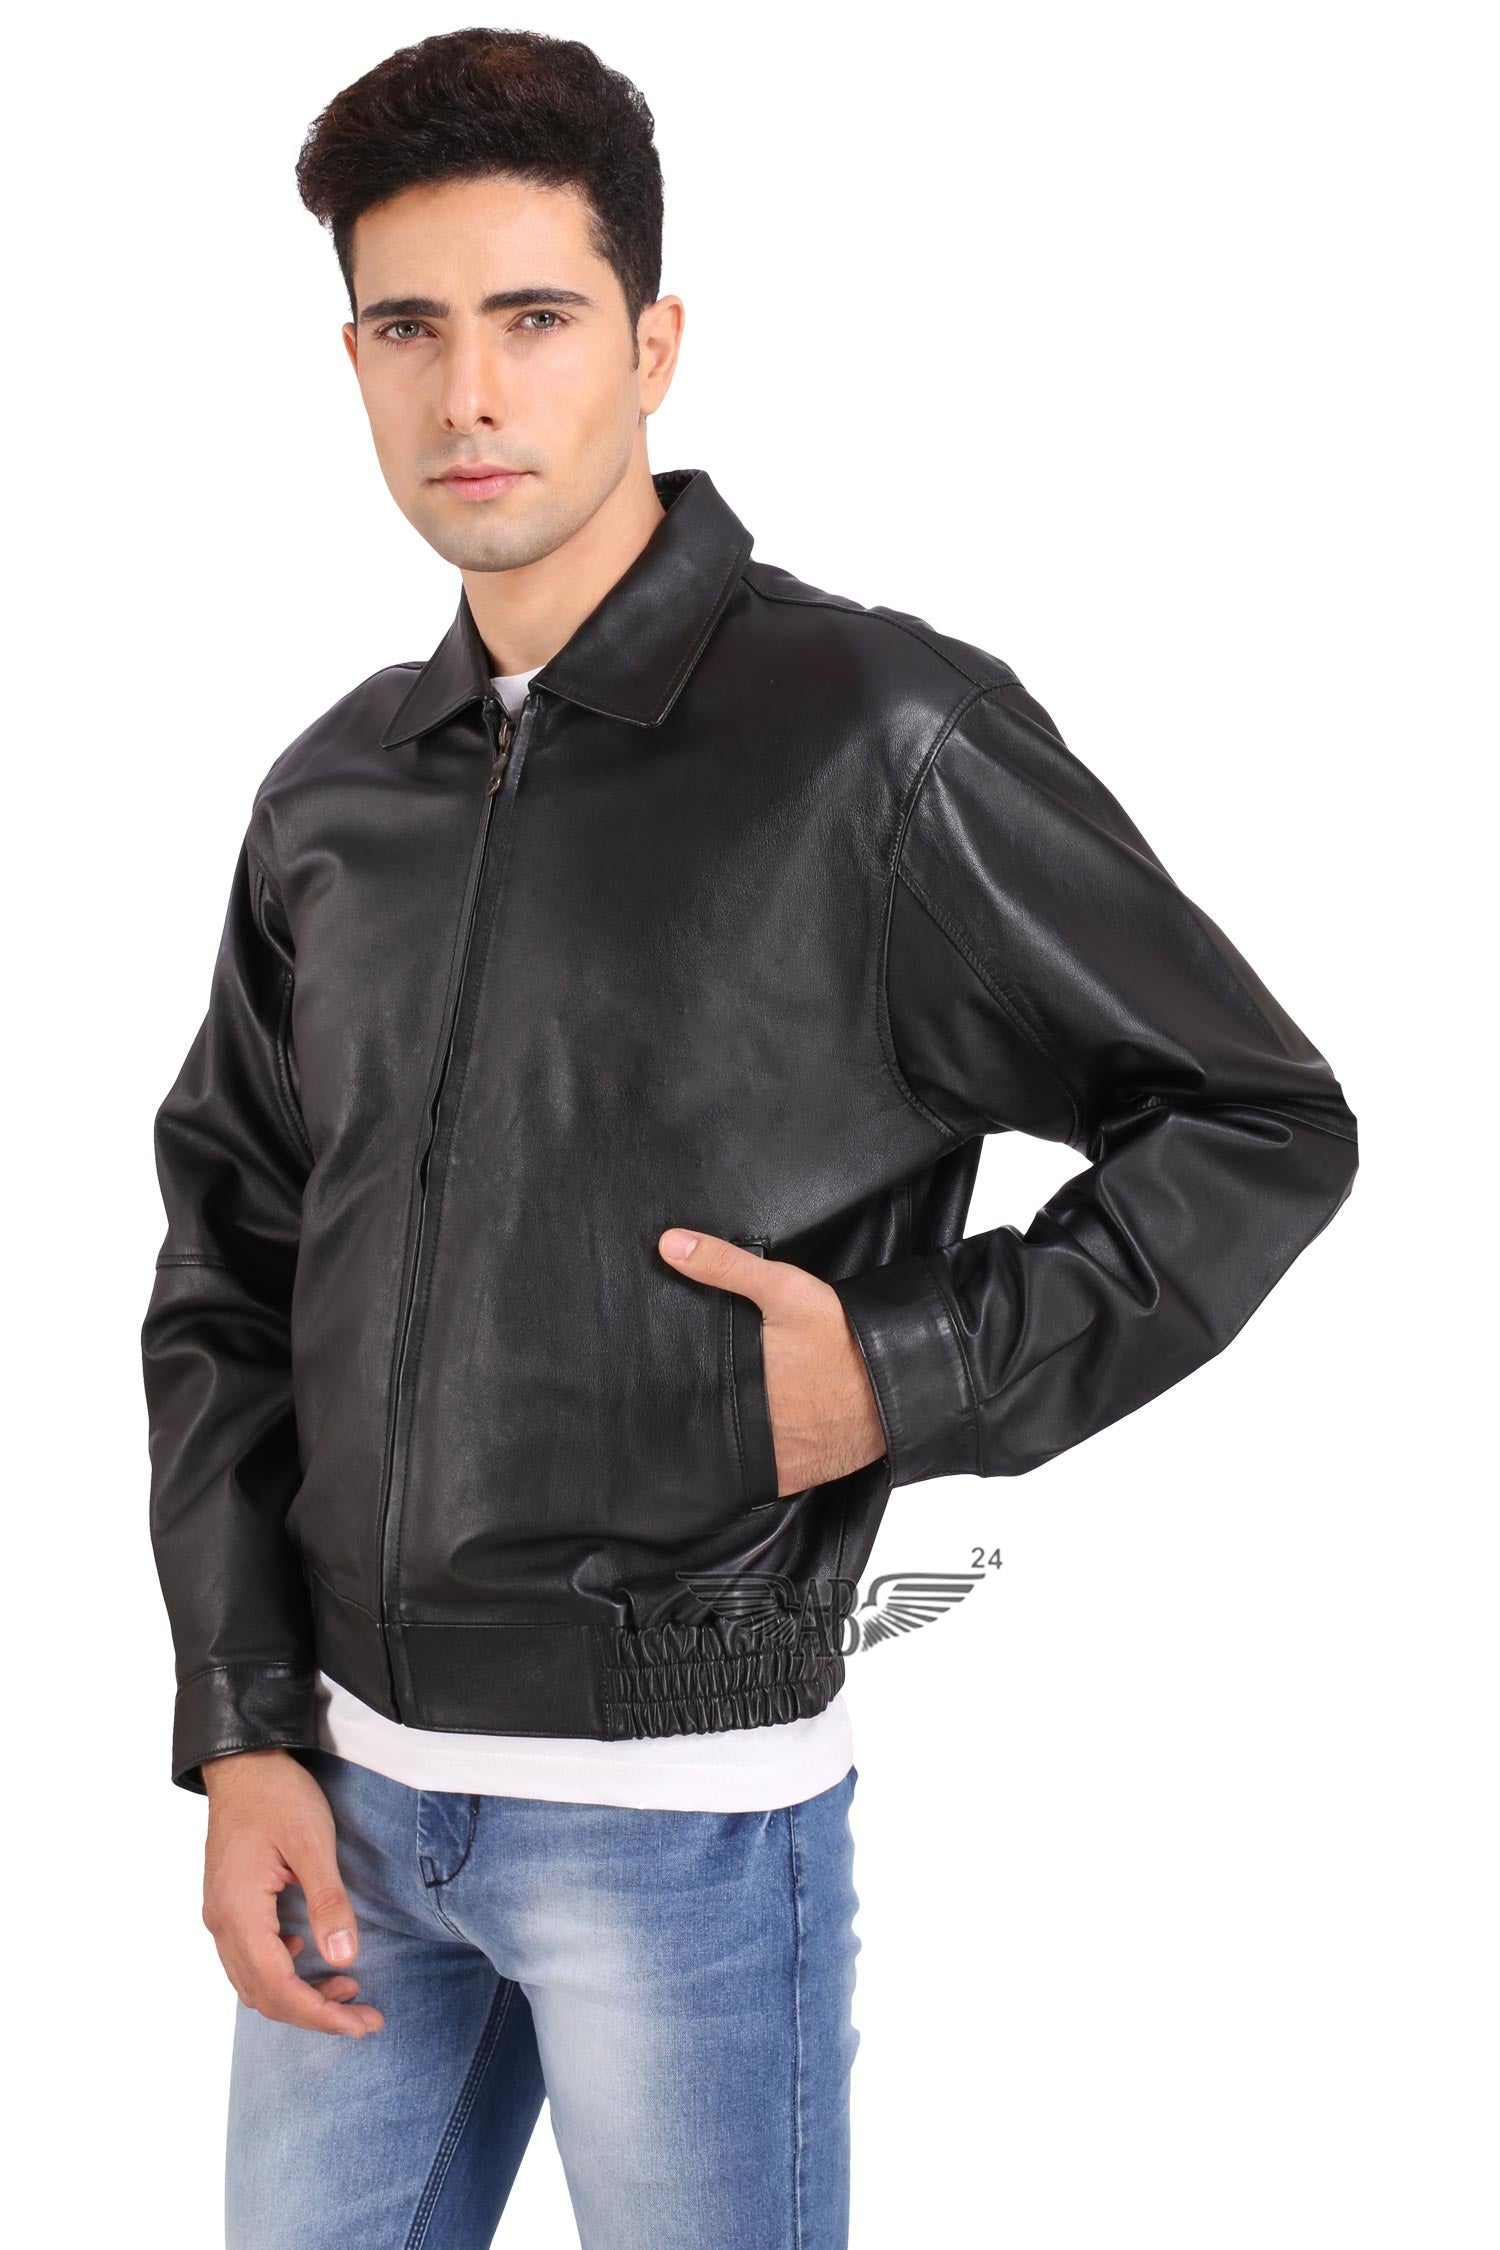 model posing for PILOT BBOMBER JACKET. He has tucked his one hand inside slit pocket Jacket is zipped